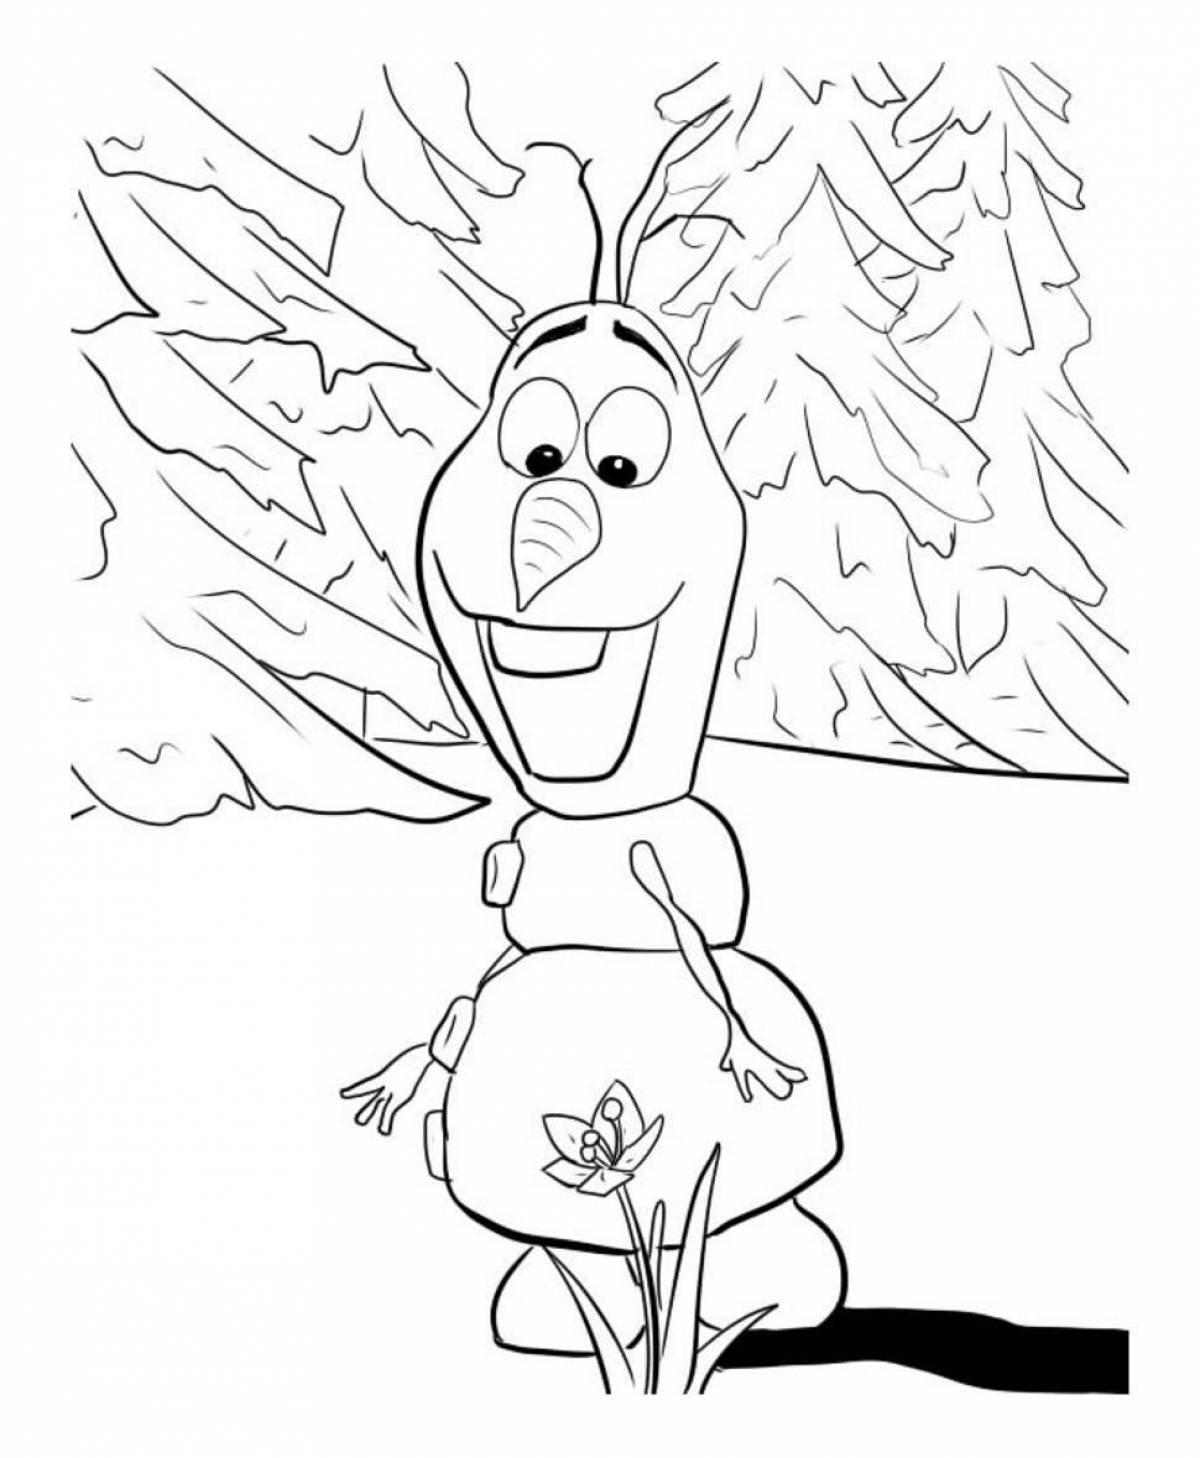 Olaf comic coloring